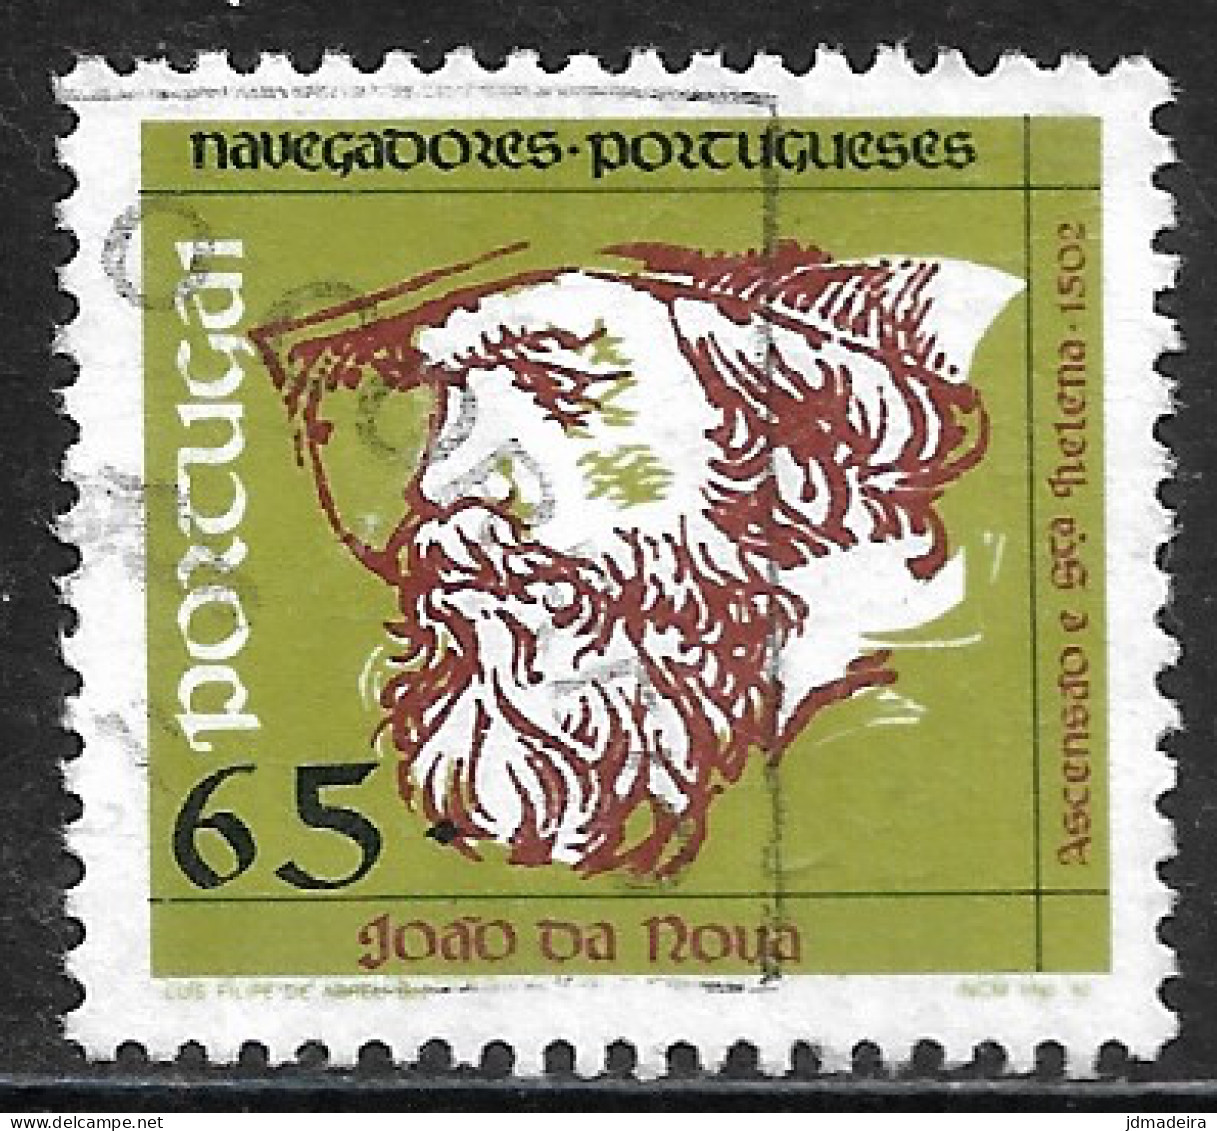 Portugal – 1992 Portuguese Navigators 65. Used Stamp - Used Stamps